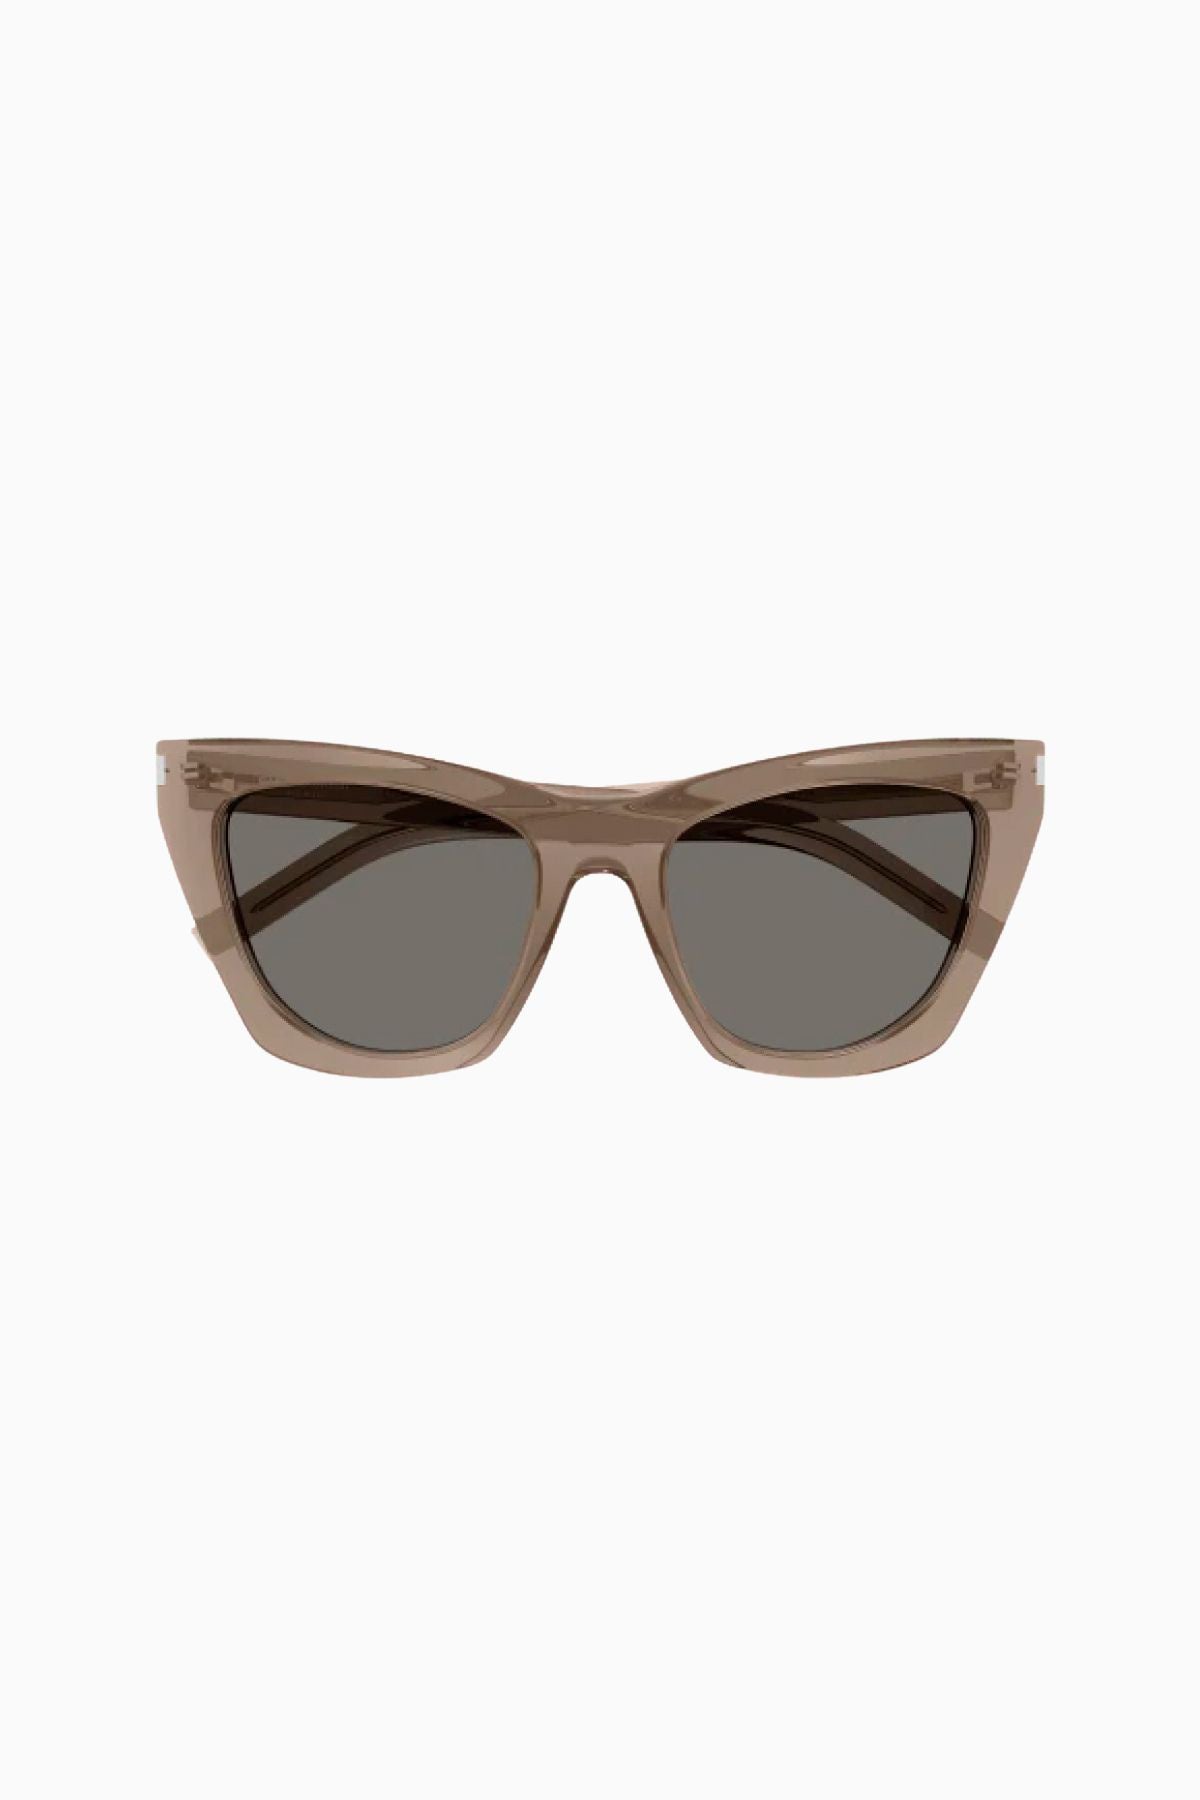 Saint Laurent Kate Sunglasses - Brown